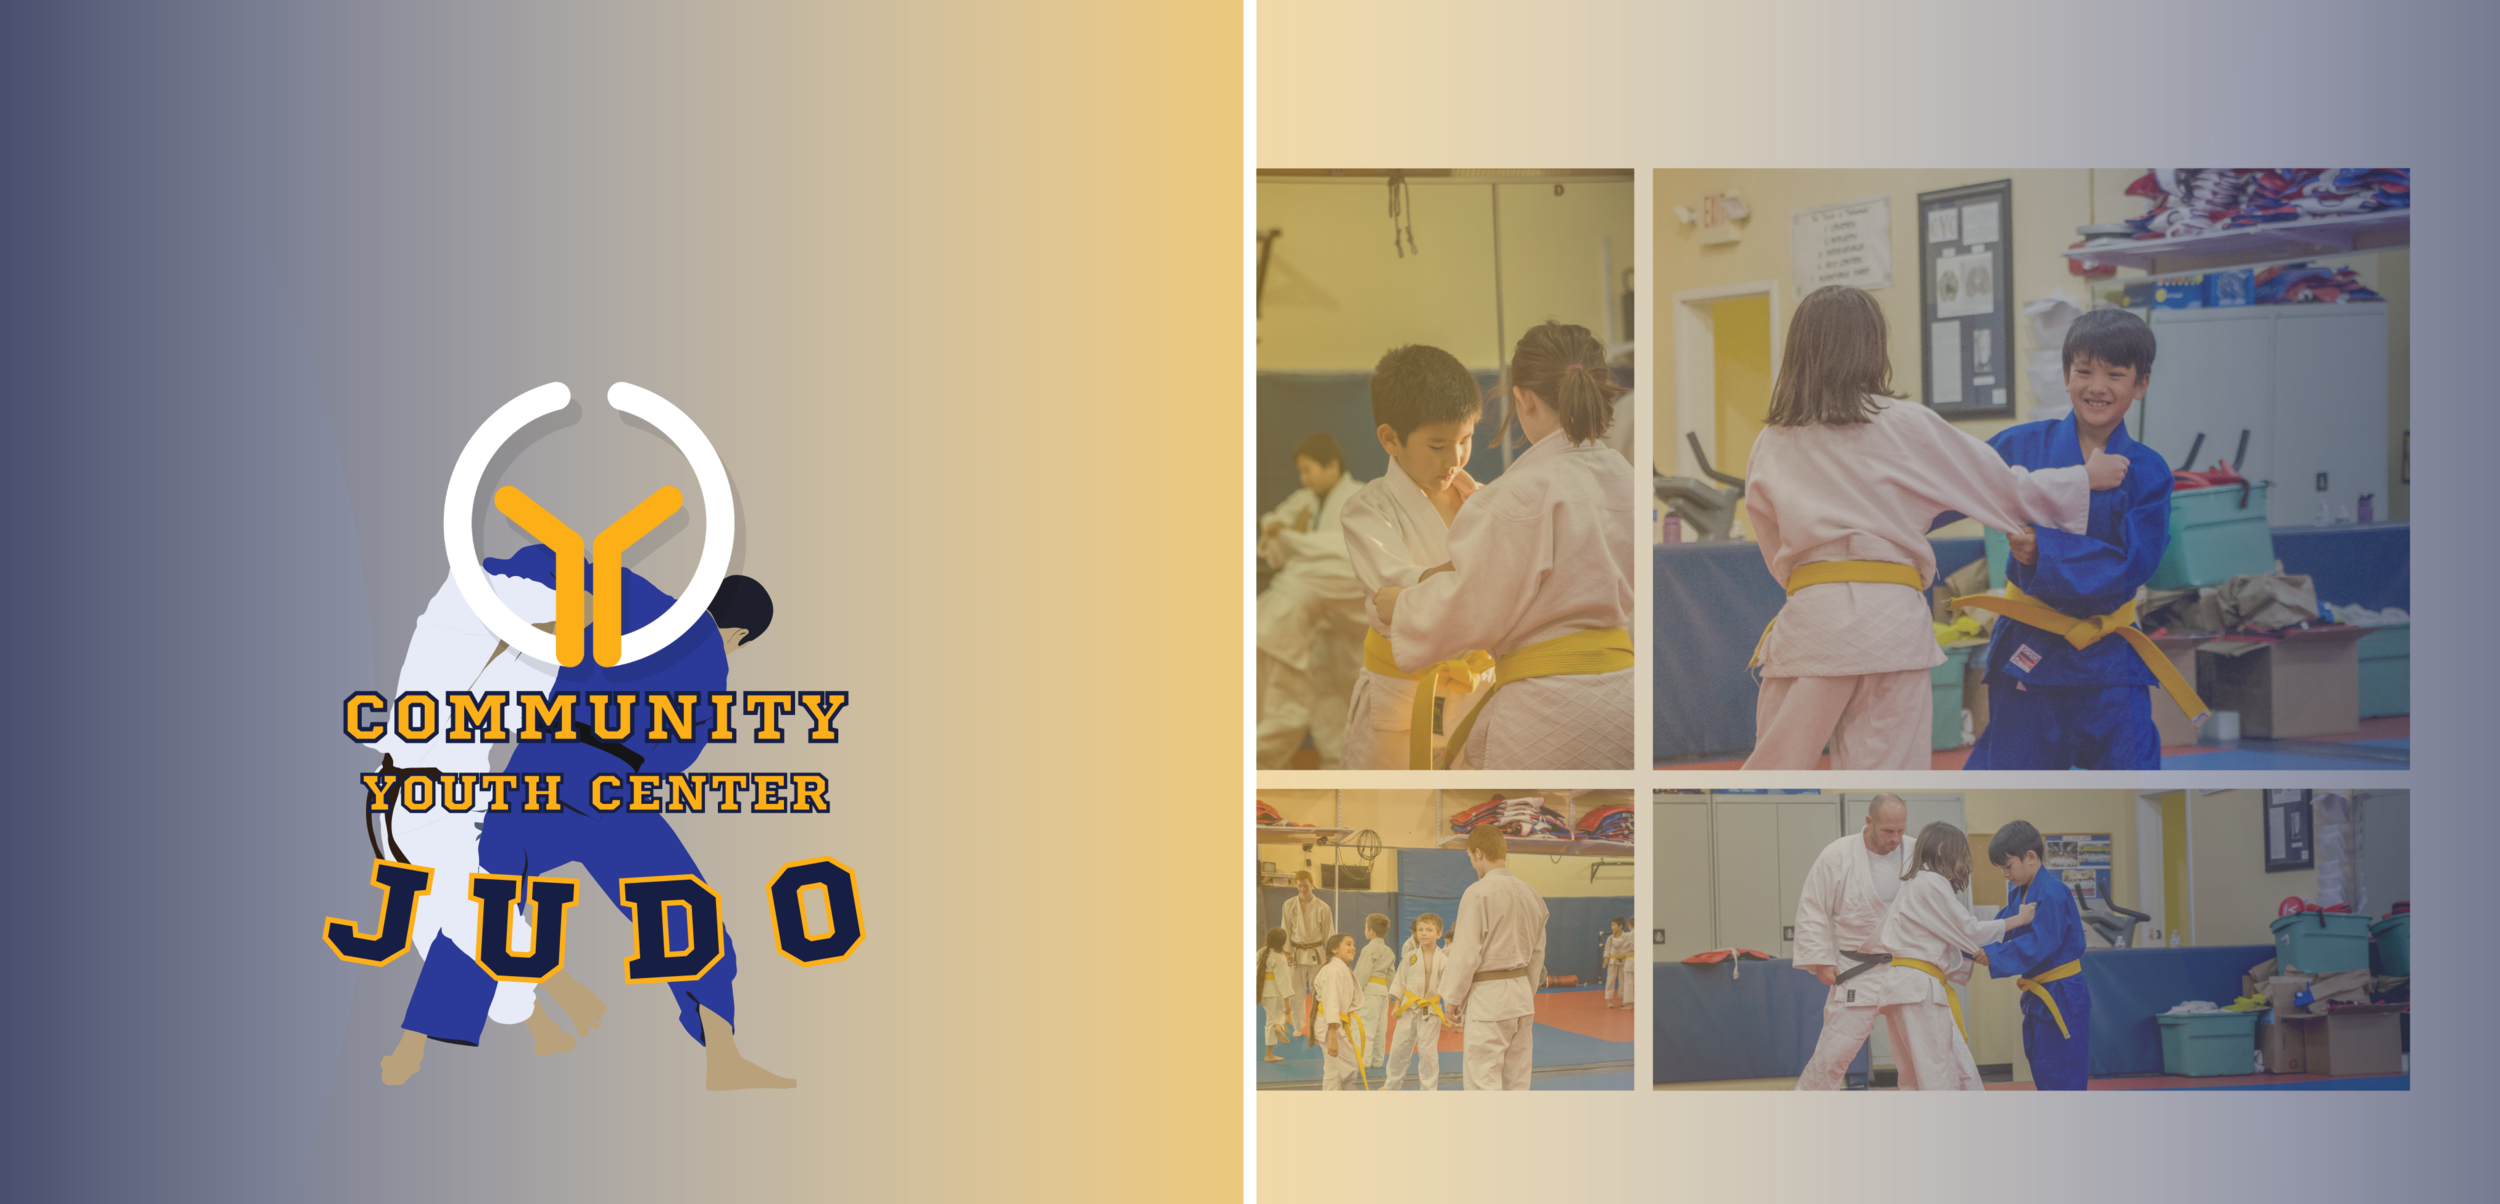 Judo — Community Youth Center